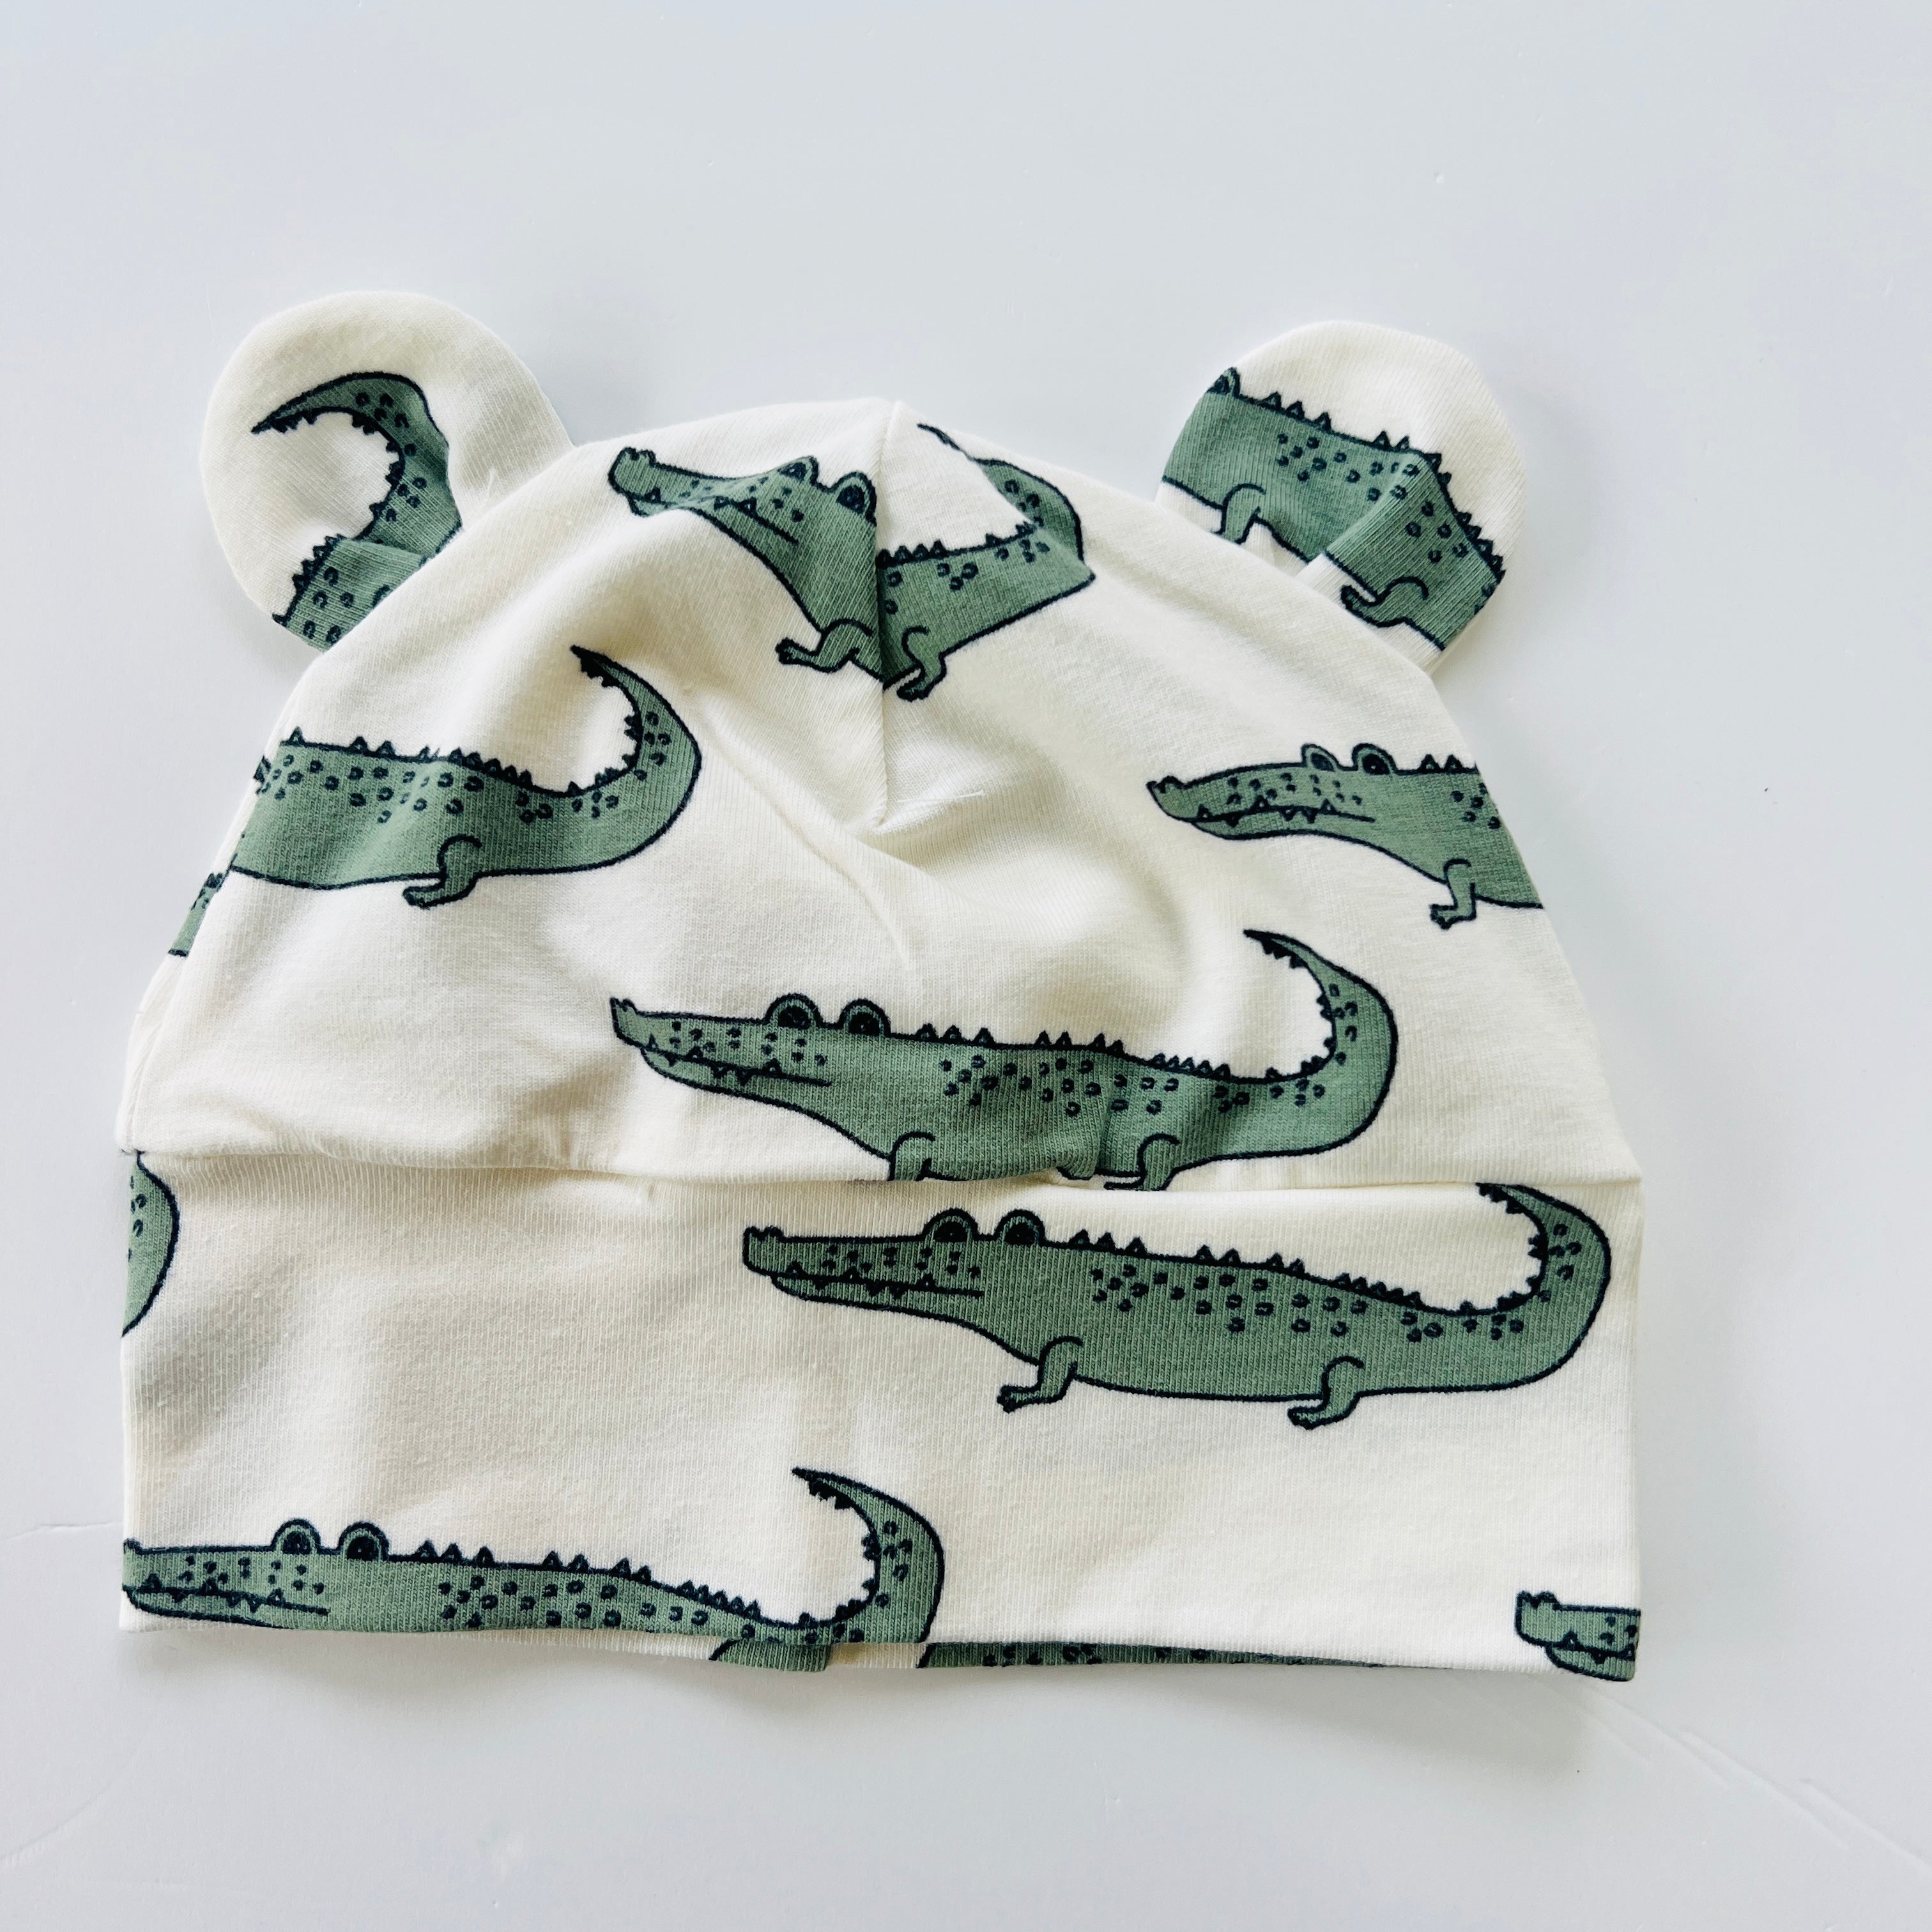 Eddie & Bee organic cotton Baby hat  in Cream " Ginormous Crocodile" print.